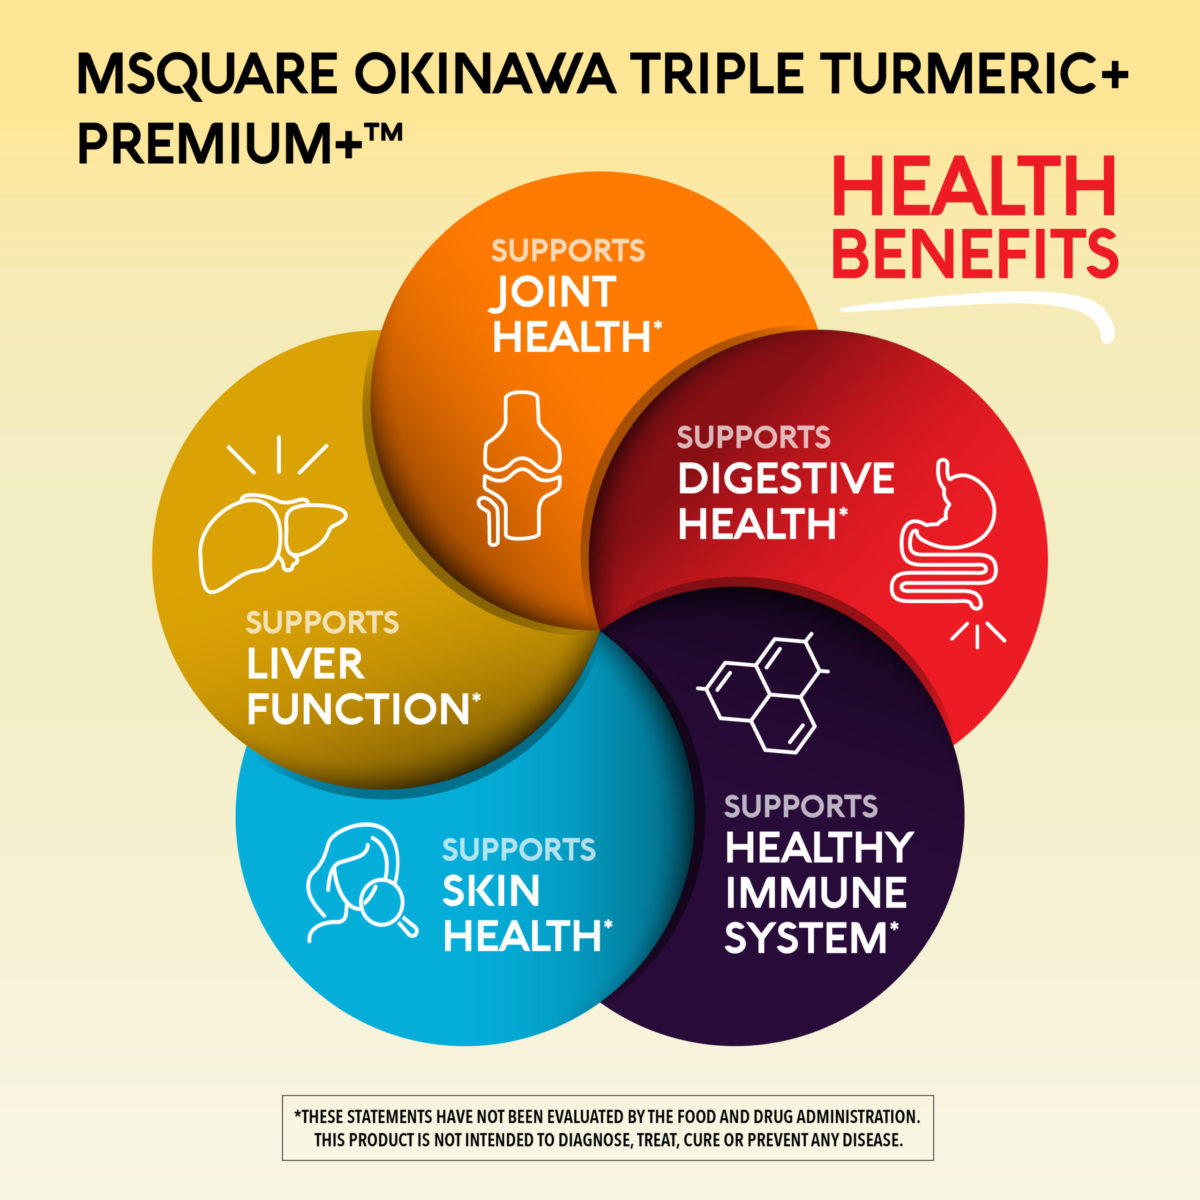 MSquare Okinawa Triple Turmeric Premium + Product Benefits